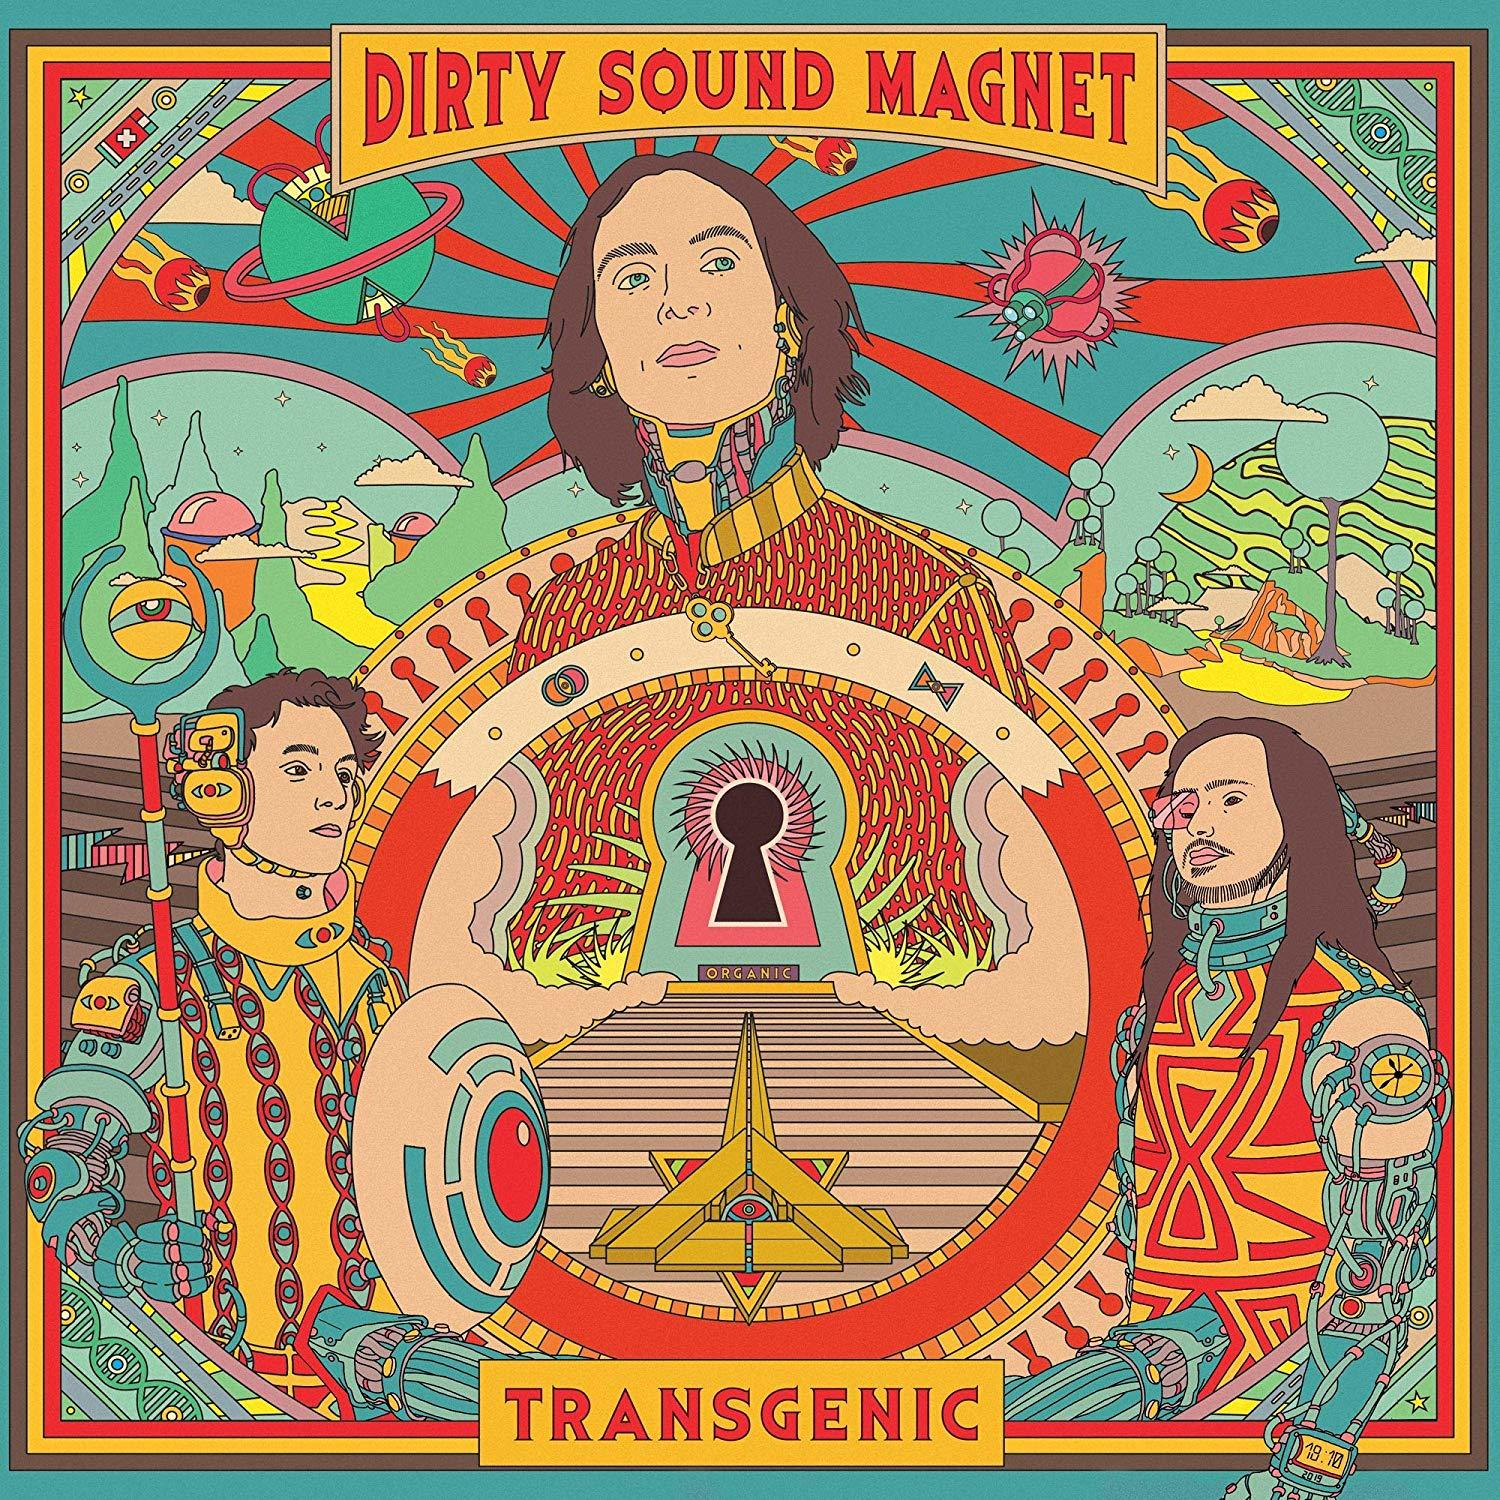 Dirty Sound Magnet (CD) - TRANSGENIC 